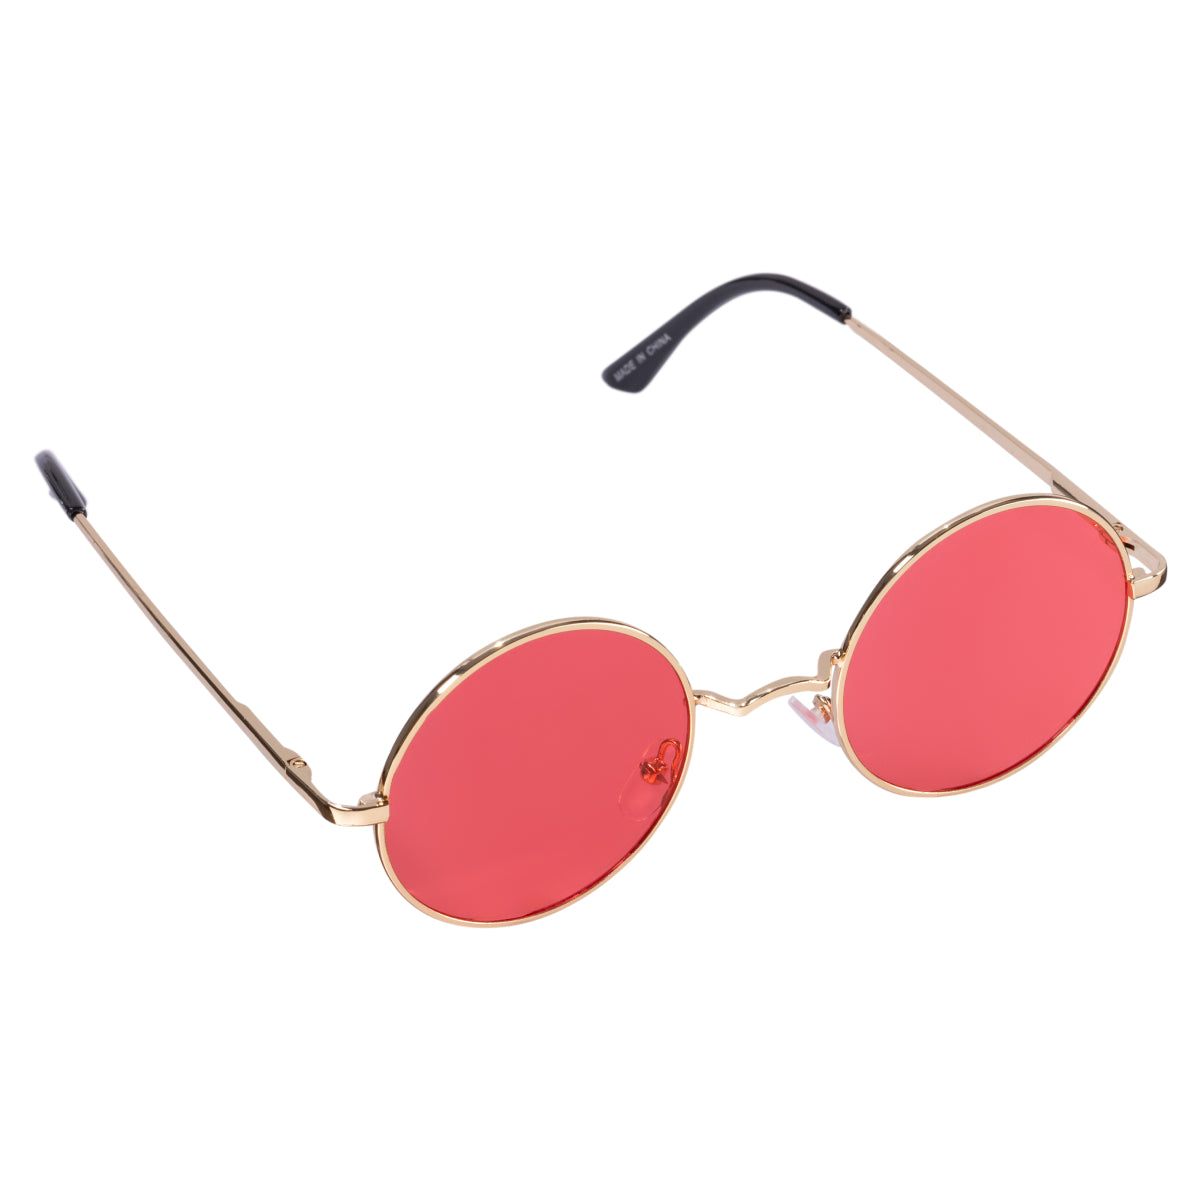 John Lennon Vintage Round Sunglasses Costume Accessory - Red